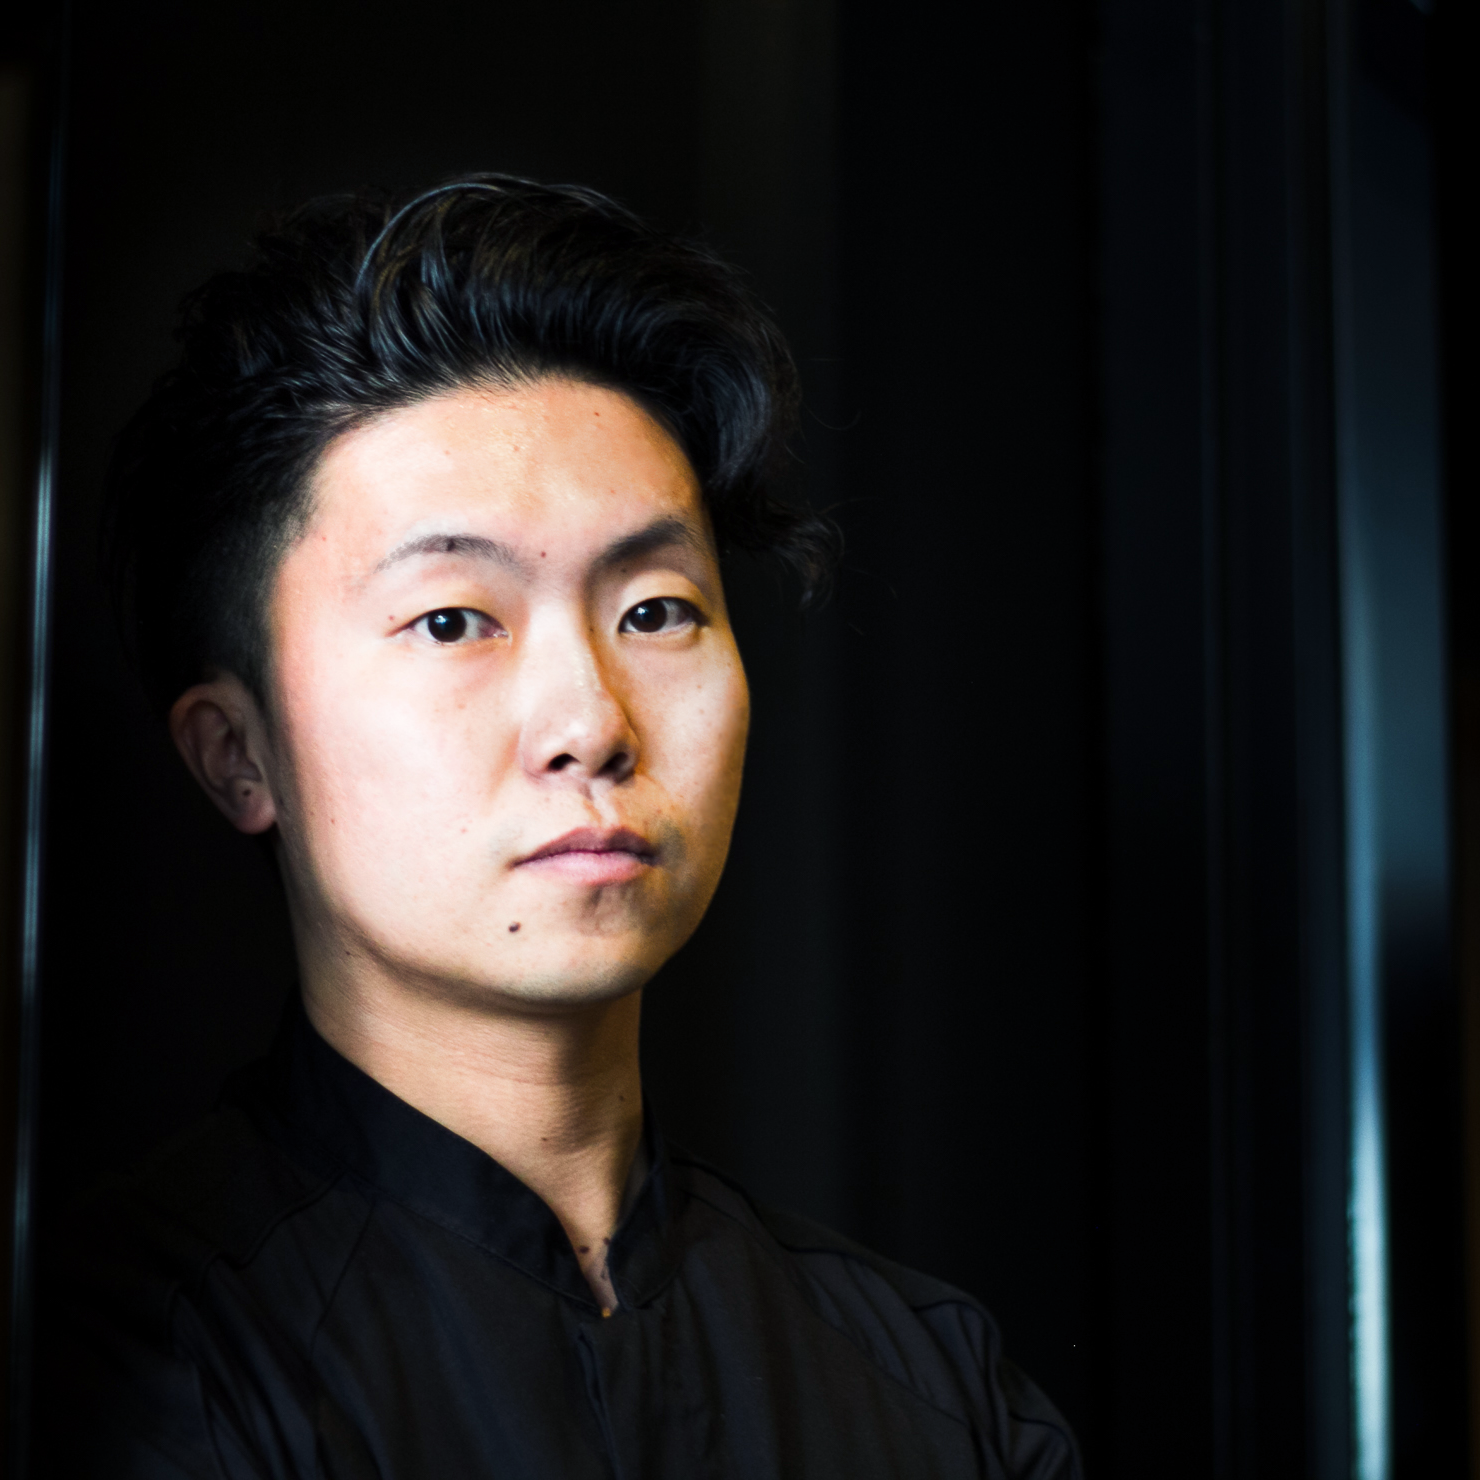 At Hana, chef Nakagawa takes diners on a magical culinary journey.